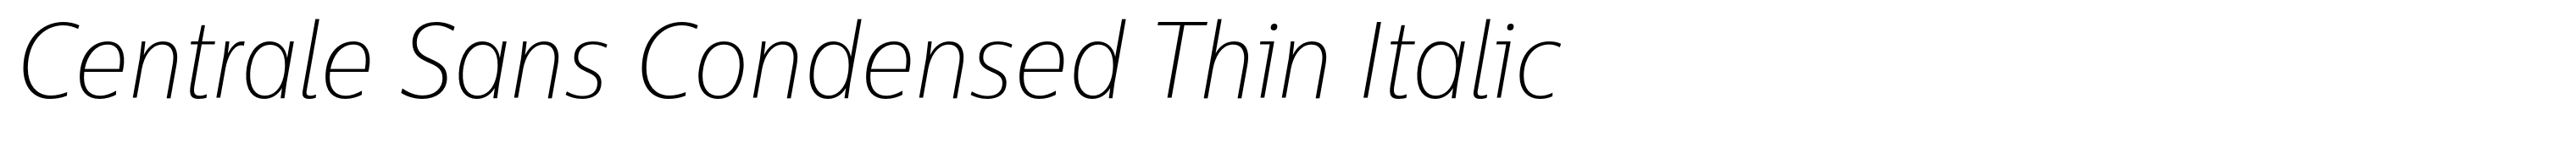 Centrale Sans Condensed Thin Italic